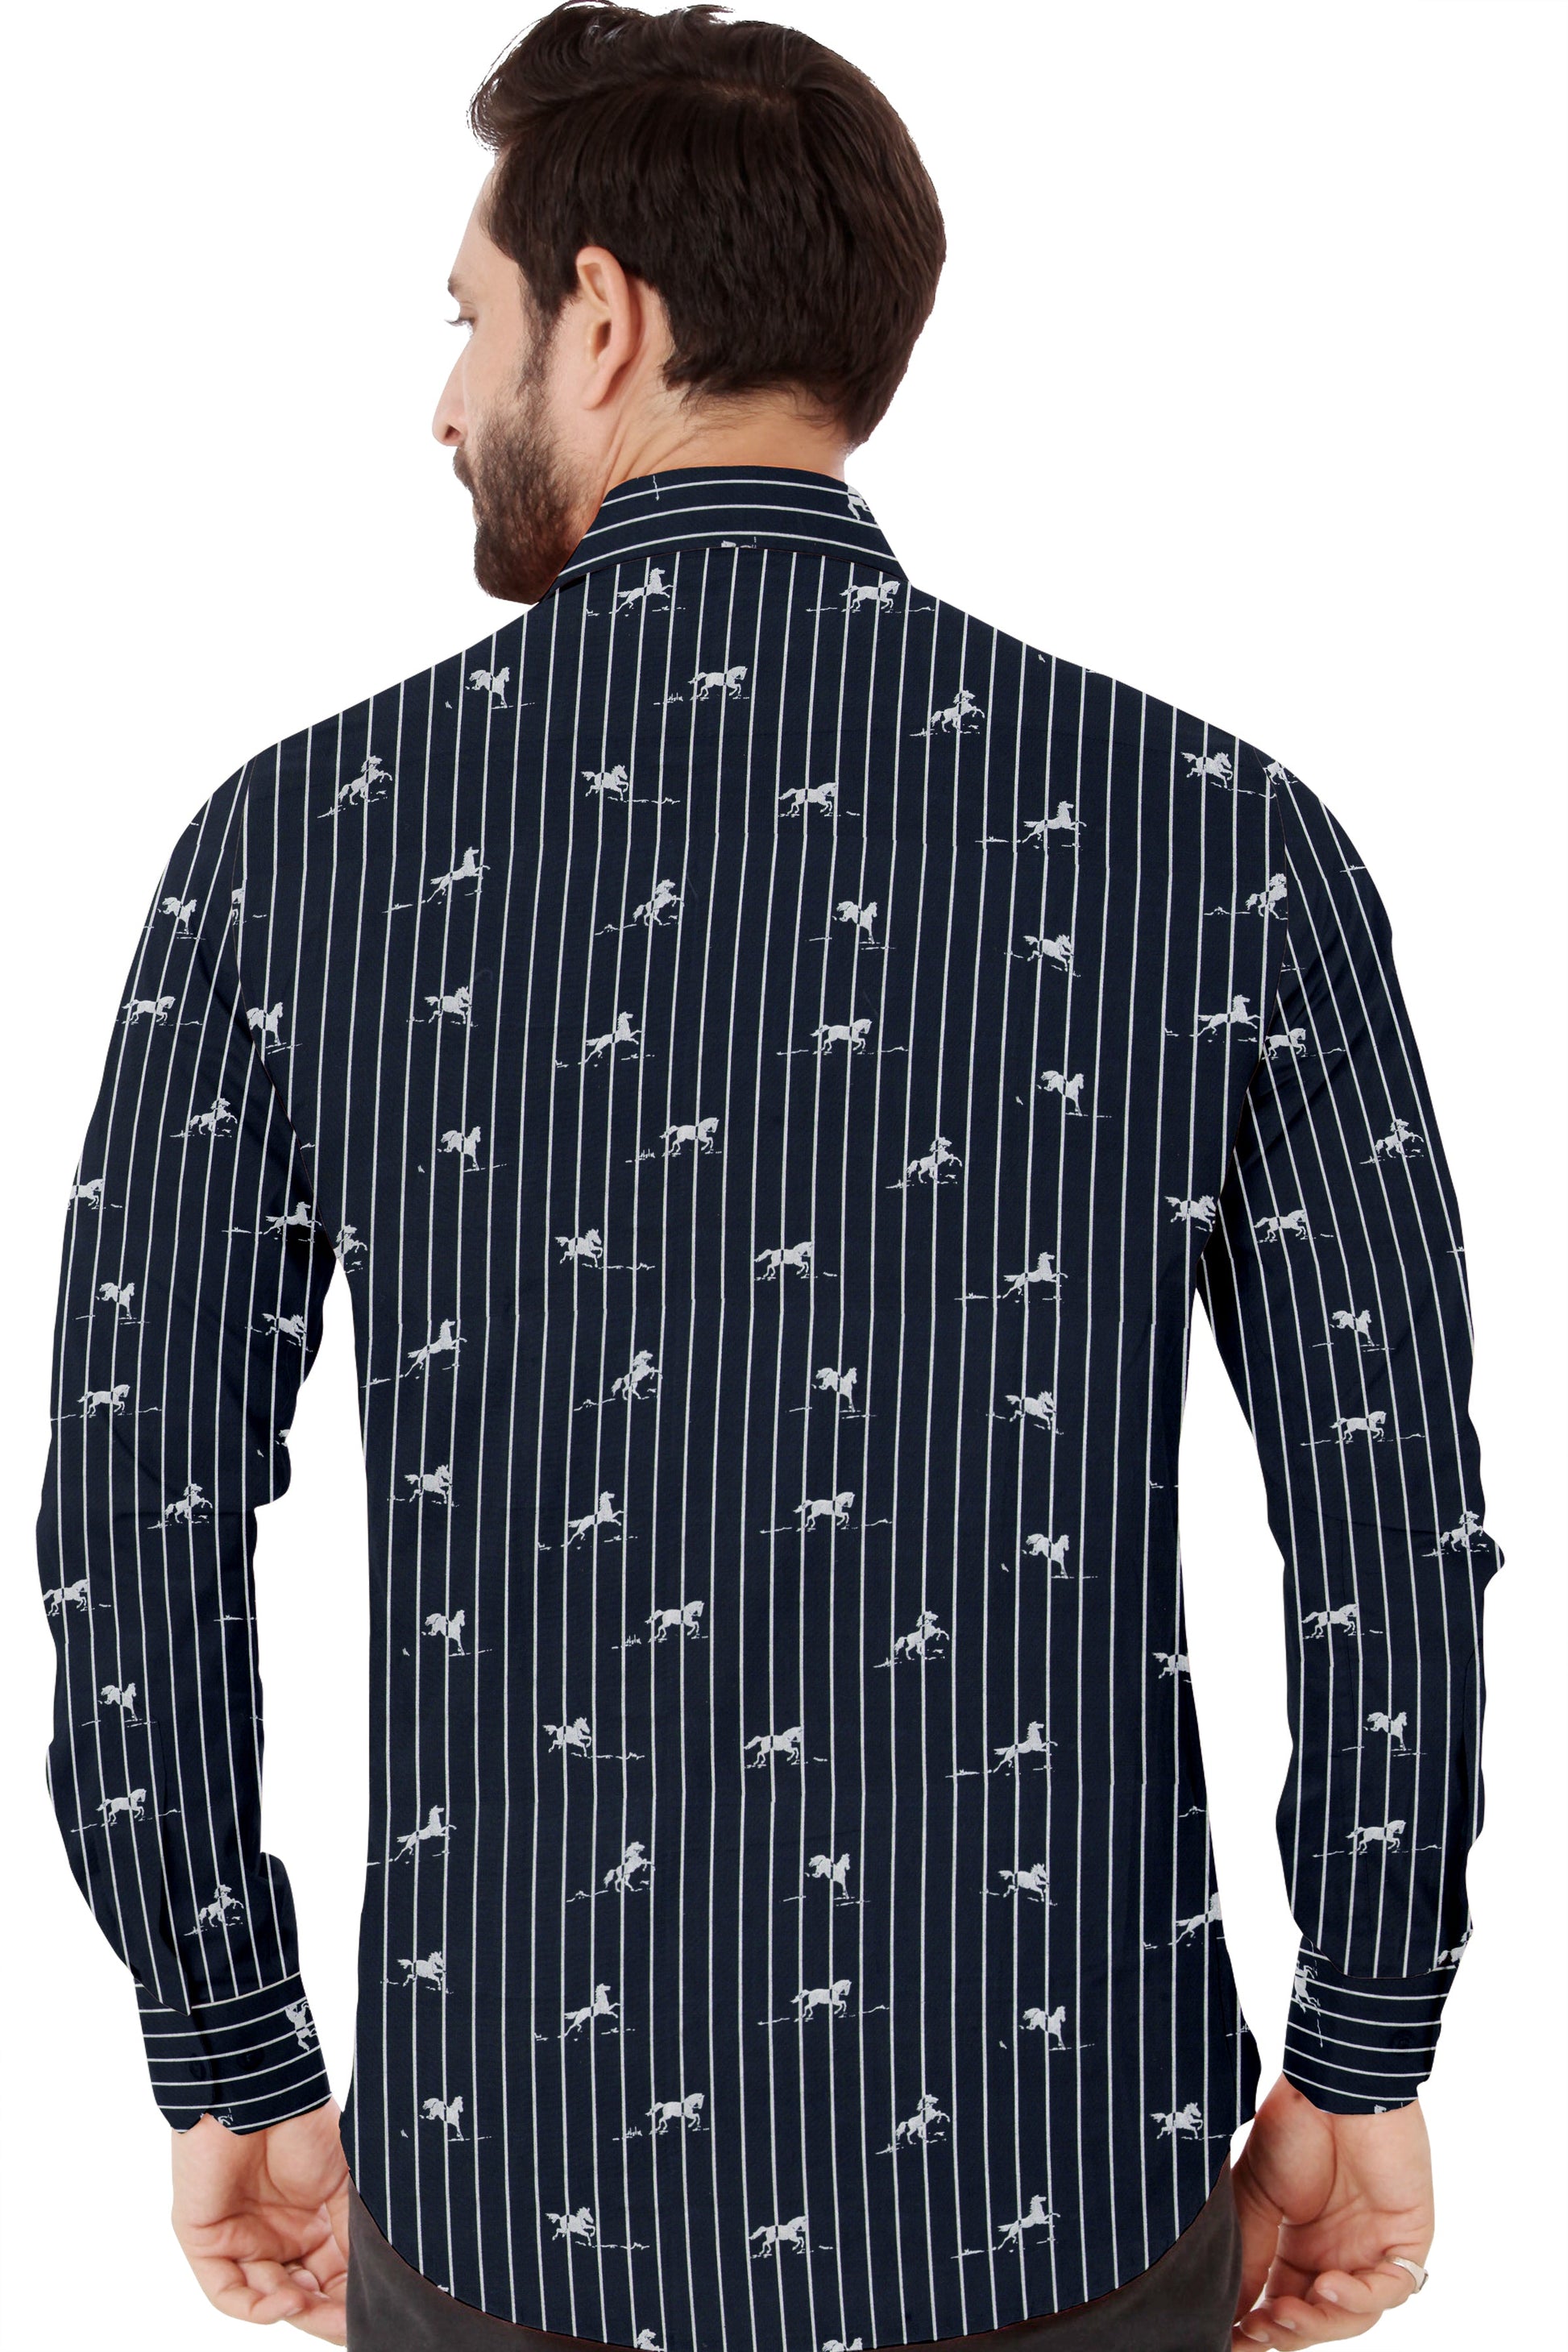 Men's Casual Shirt Full Sleeves 100% Cotton - Styleflea